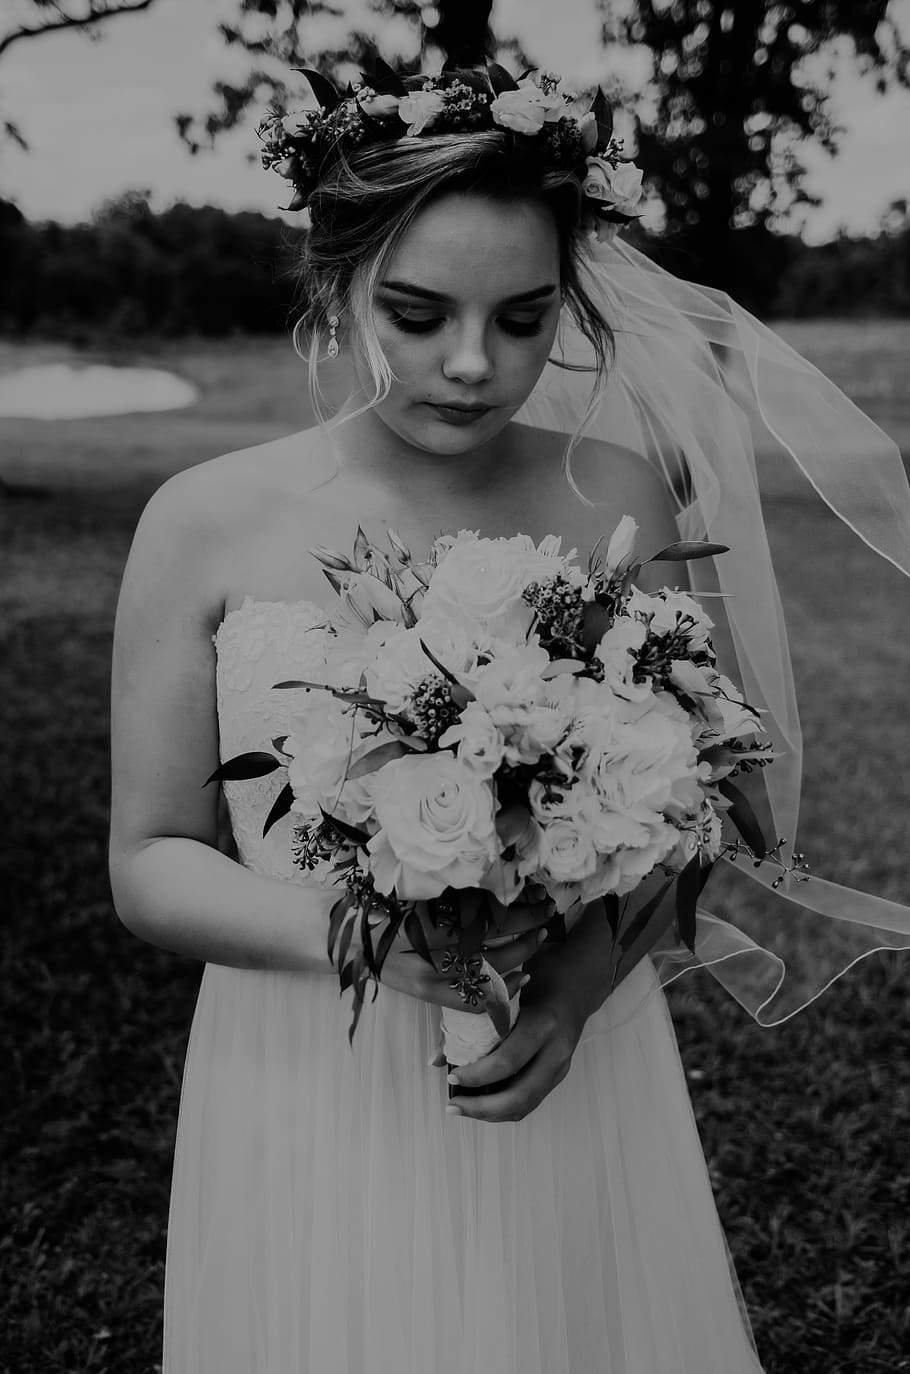 1920x1080px Free Download Hd Wallpaper Woman Wearing Wedding Dress Holding Bouquet Flower 4877